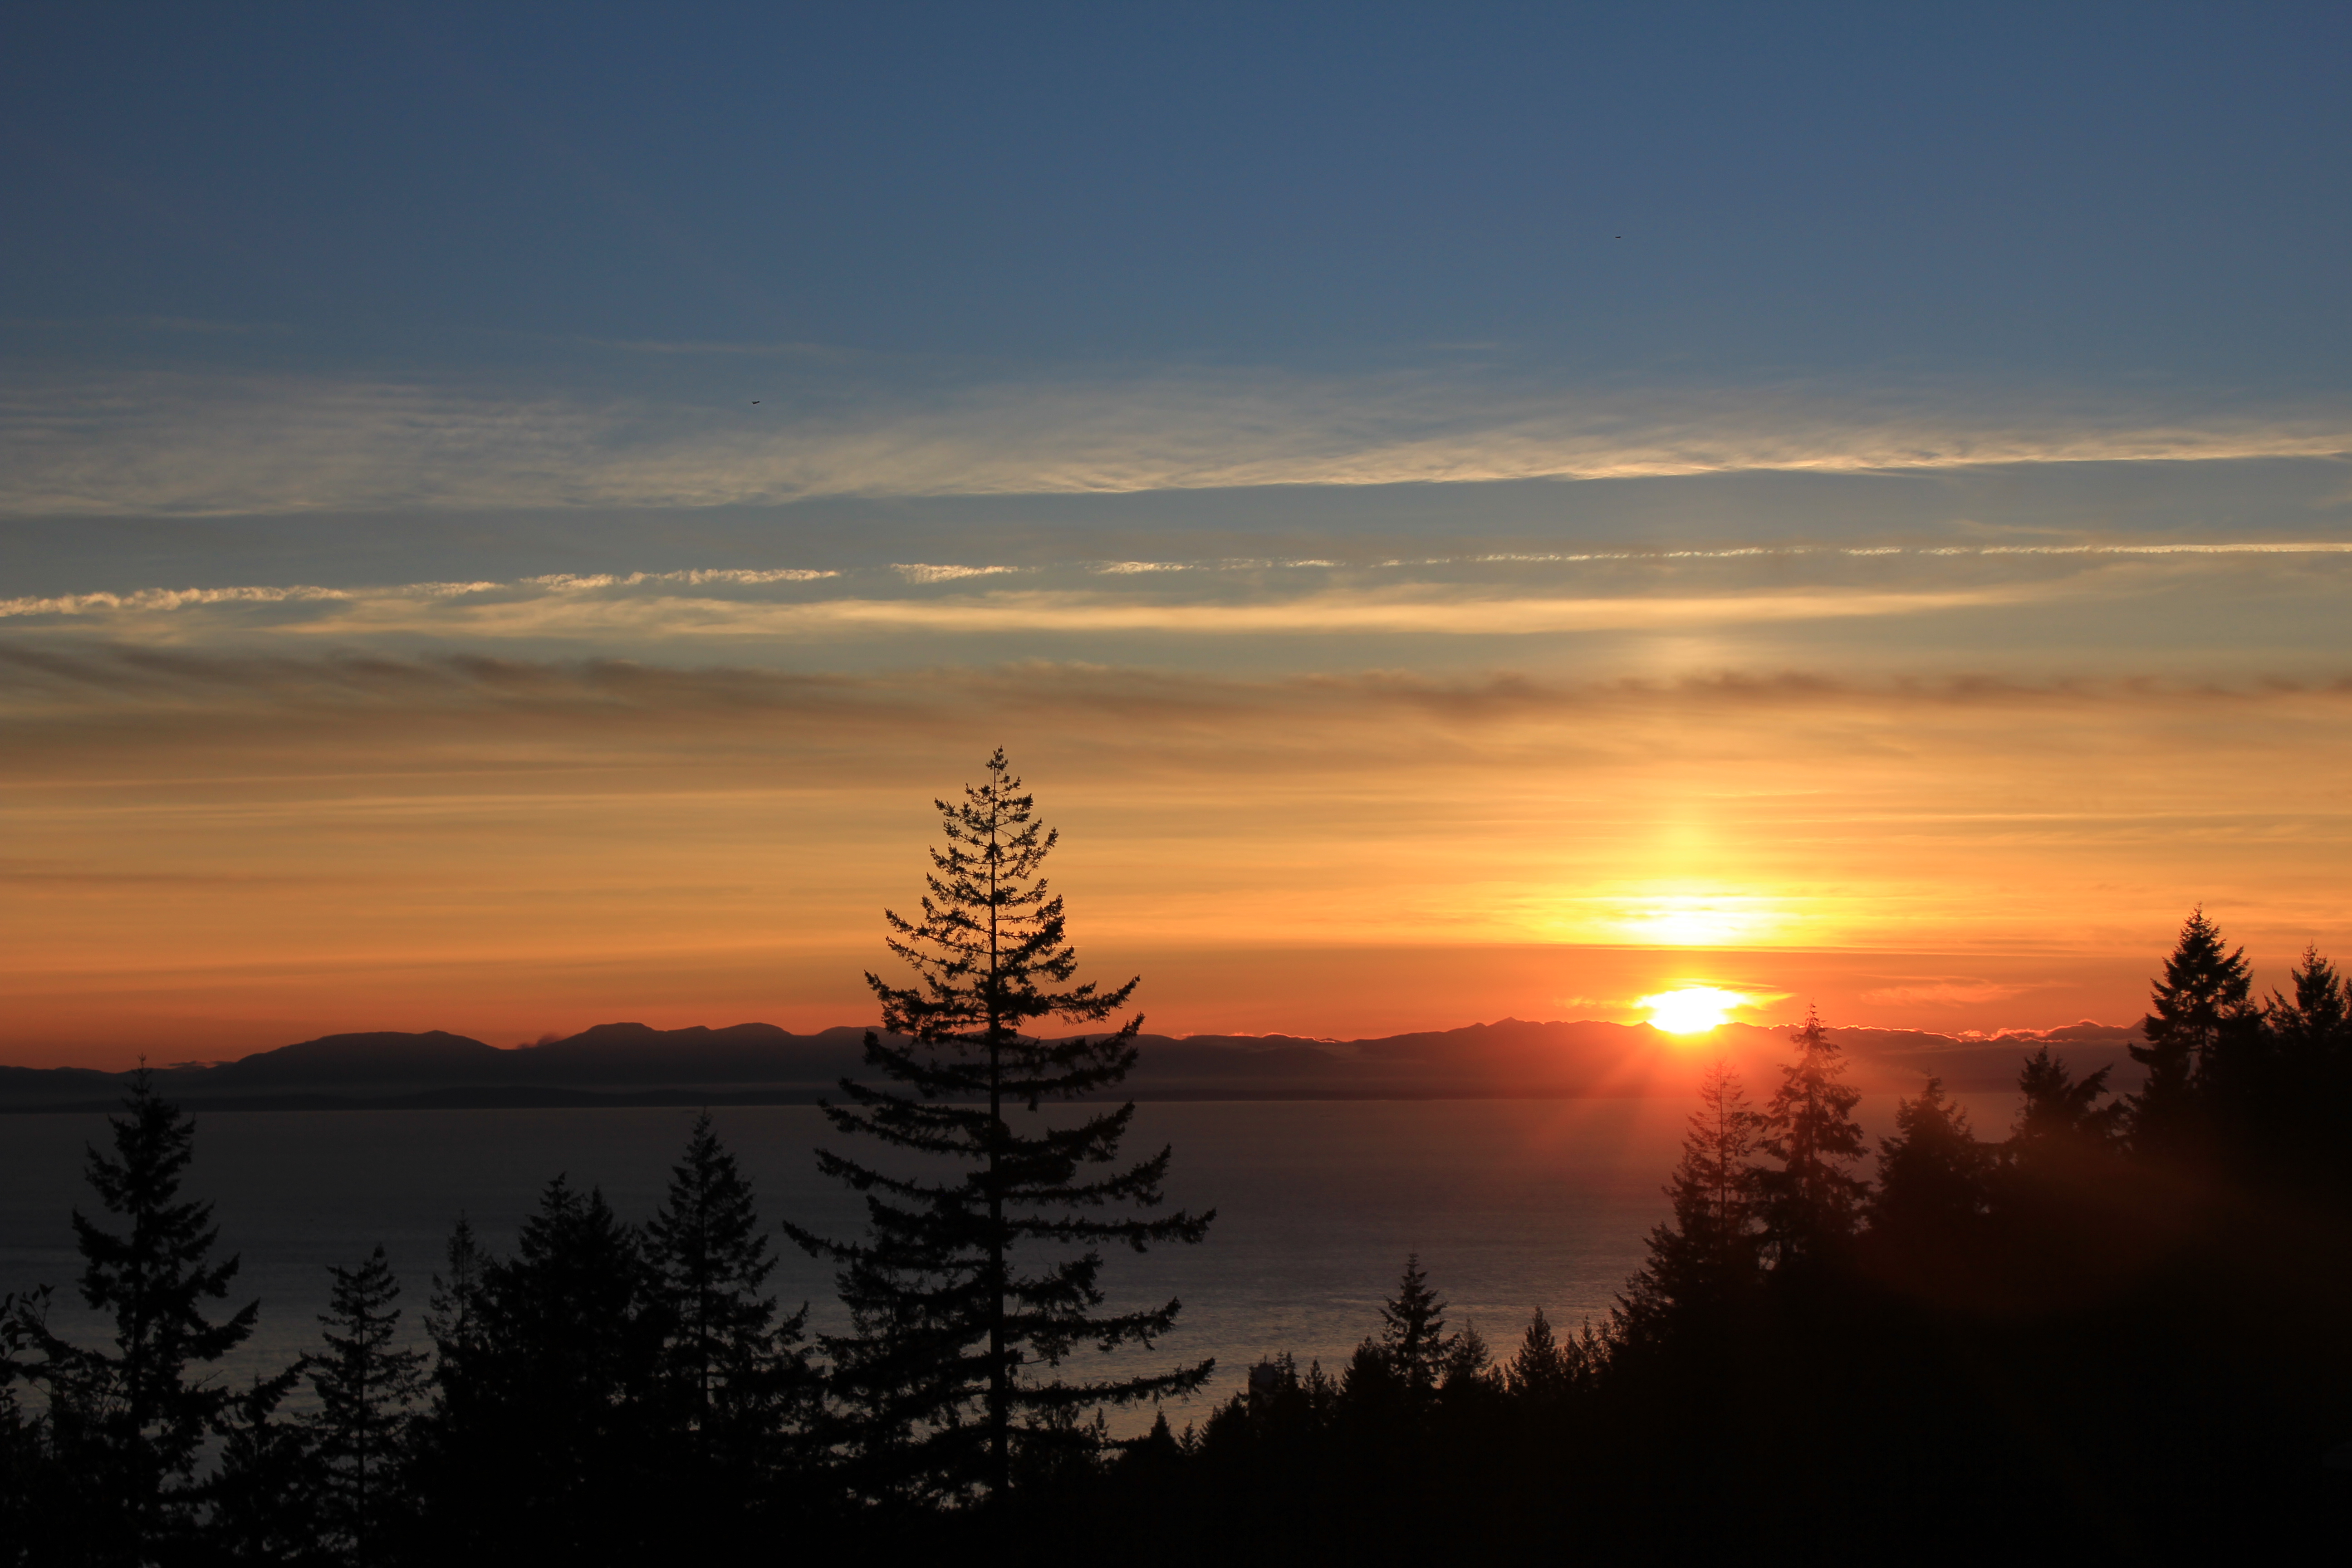 General 5184x3456 British Columbia sunset Vancouver landscape mountains orange sky low light